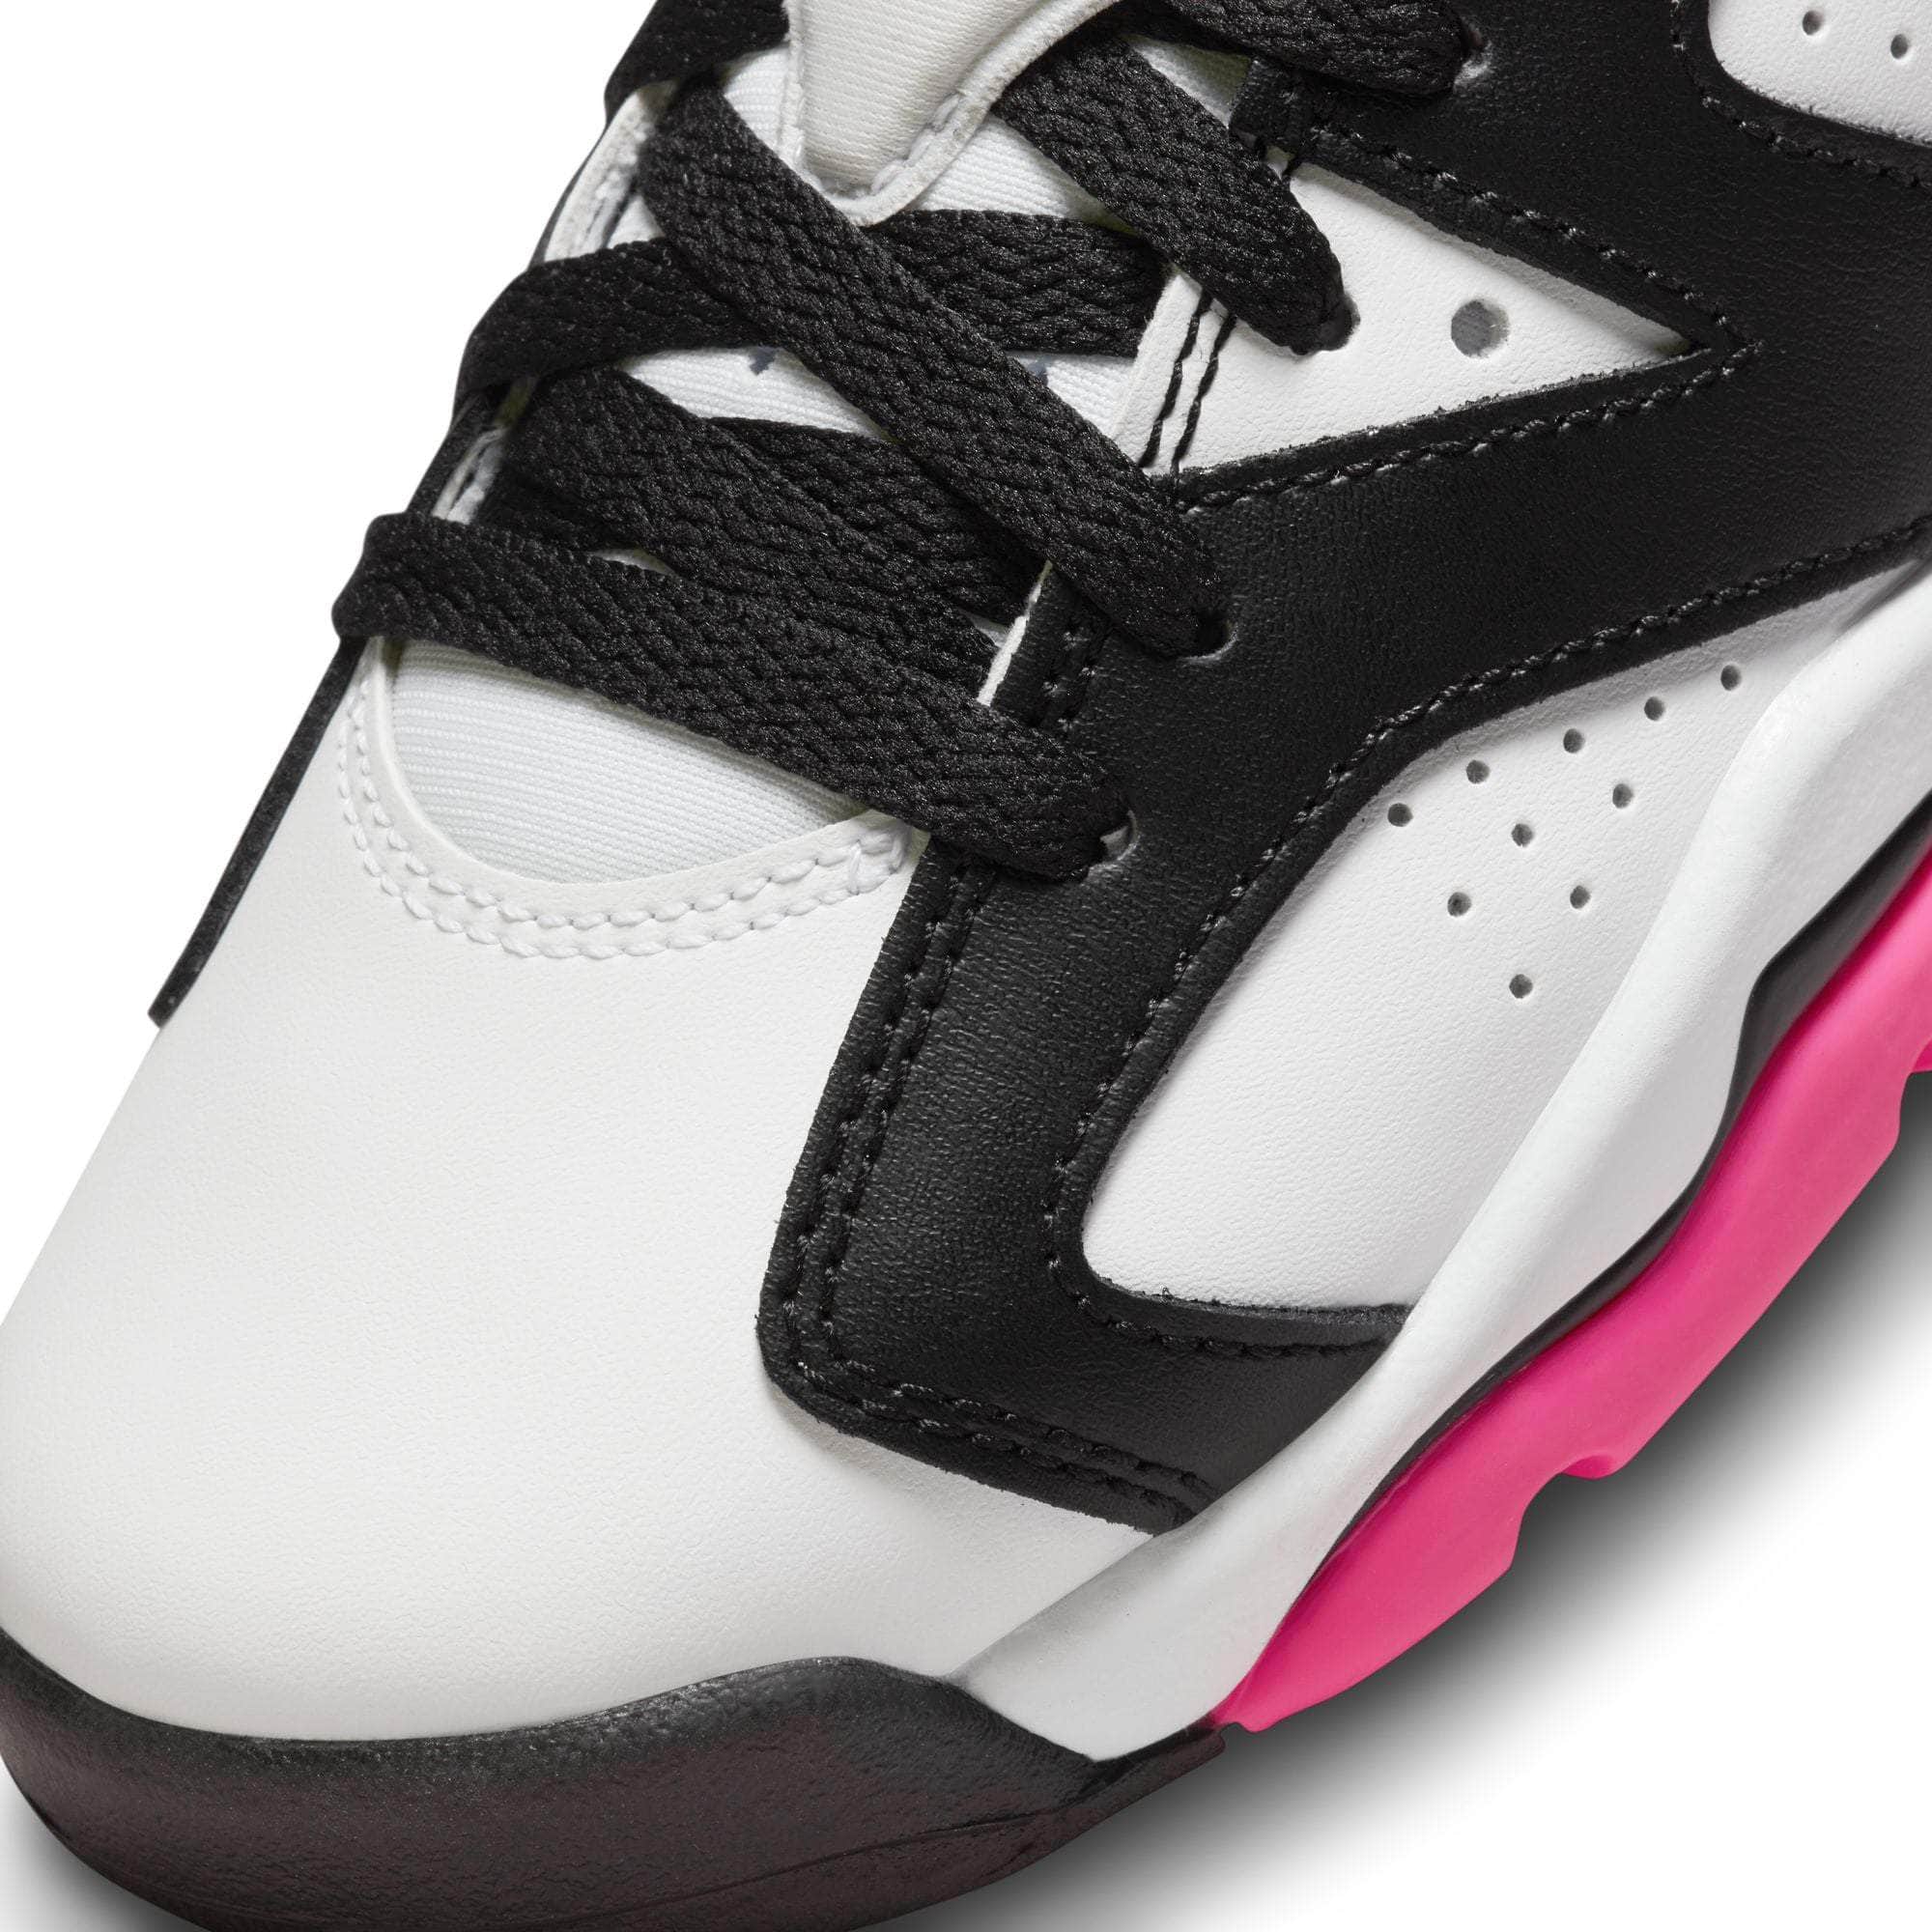 Air Jordan FOOTWEAR Air Jordan 6 Retro Low "Fierce Pink" - Boy's GS